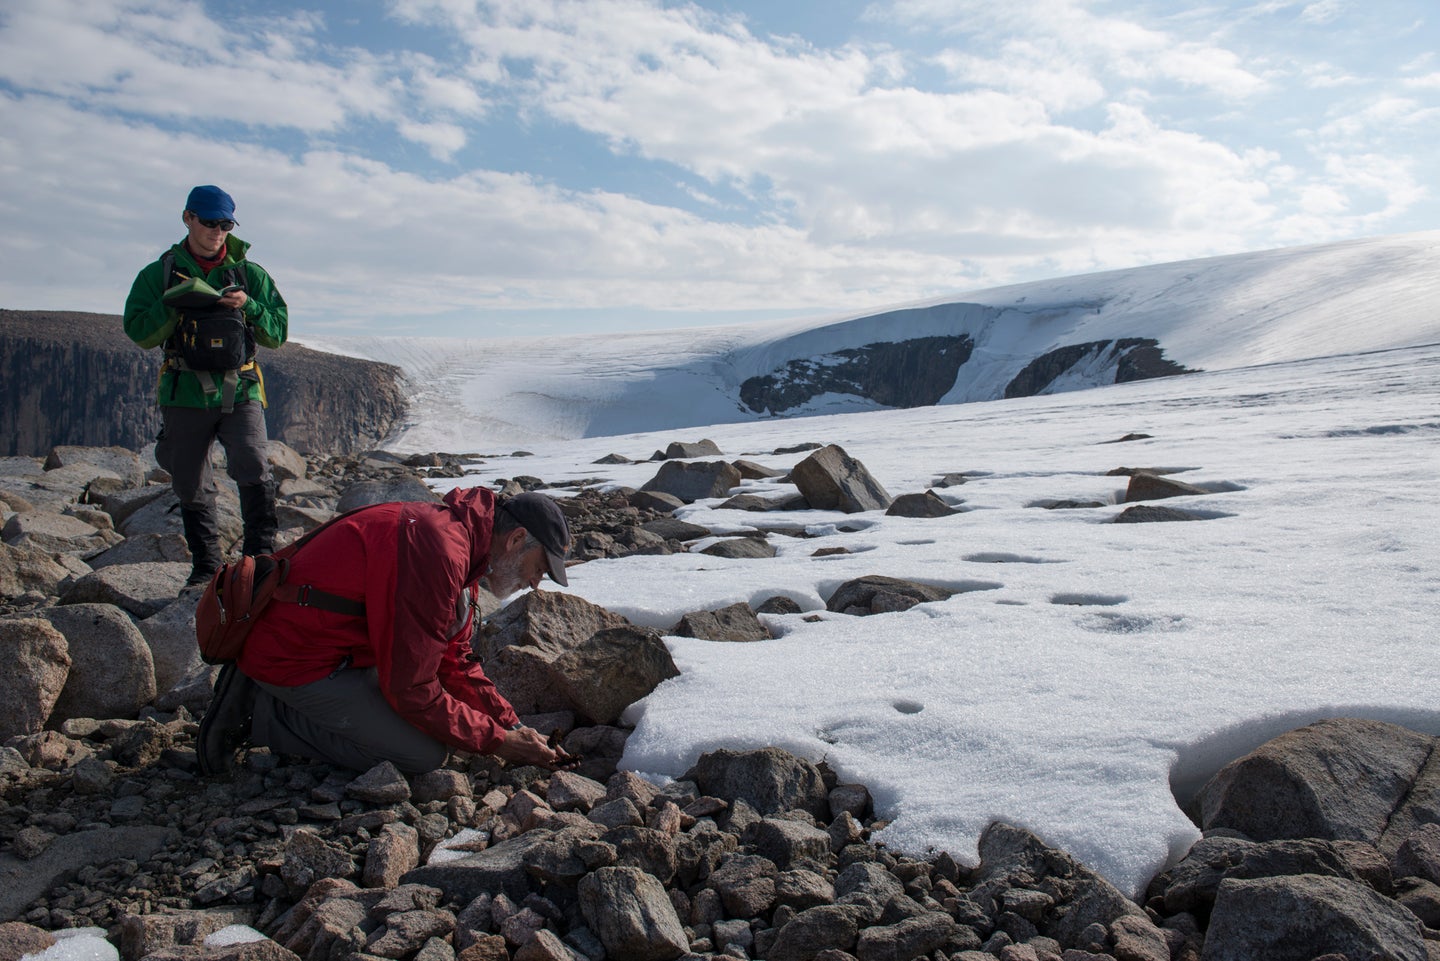 Baffin Island glacier retreat research